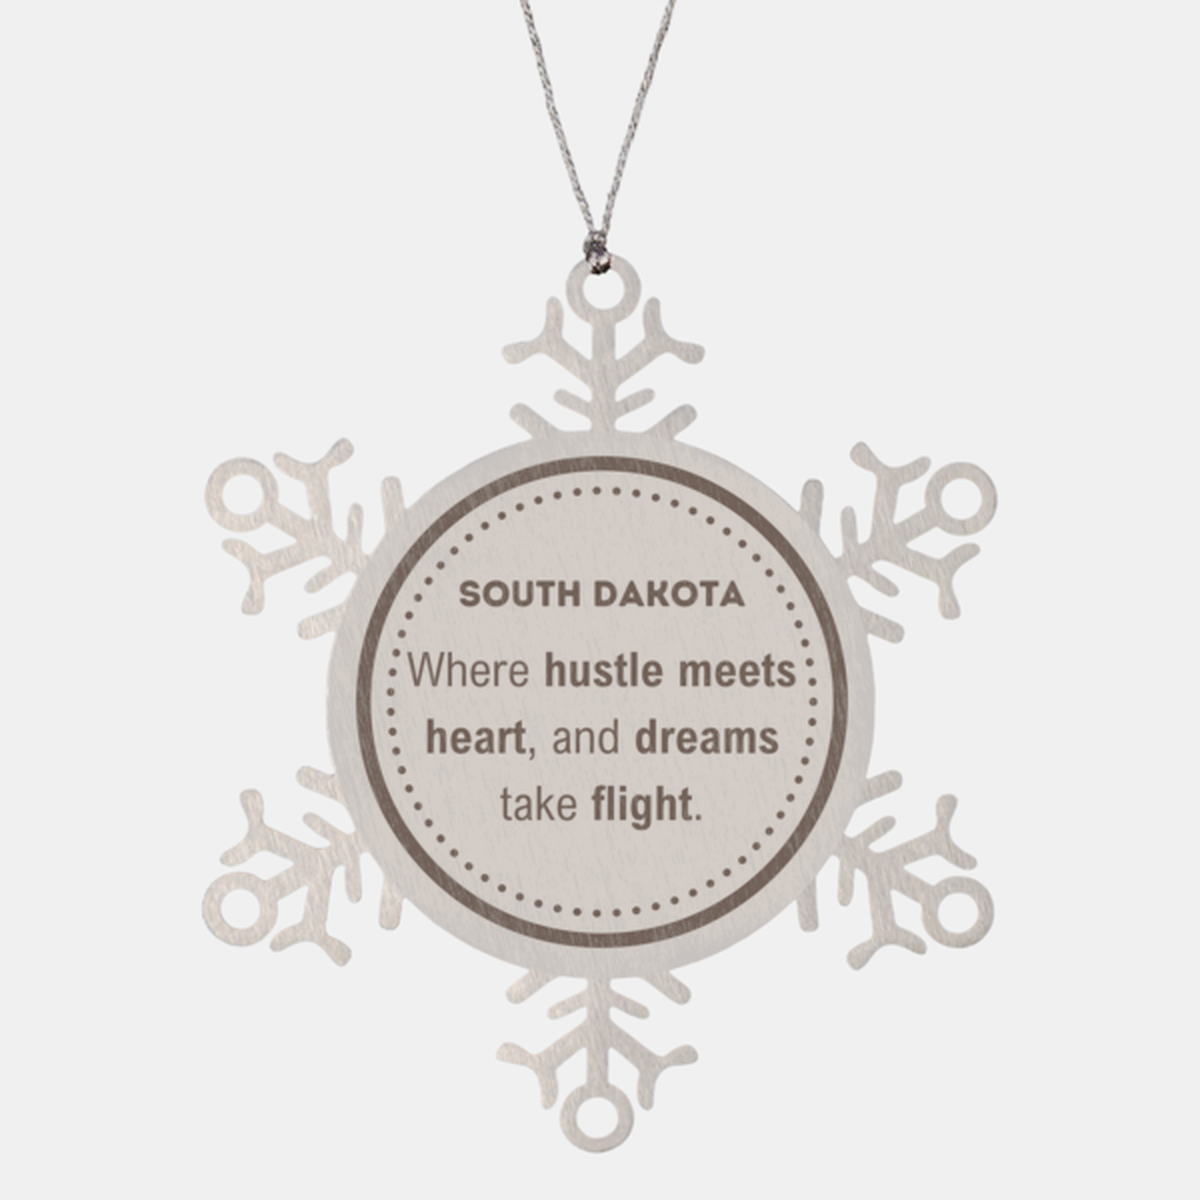 South Dakota: Where hustle meets heart, and dreams take flight, South Dakota Ornament Gifts, Proud South Dakota Christmas South Dakota Snowflake Ornament, South Dakota State People, Men, Women, Friends